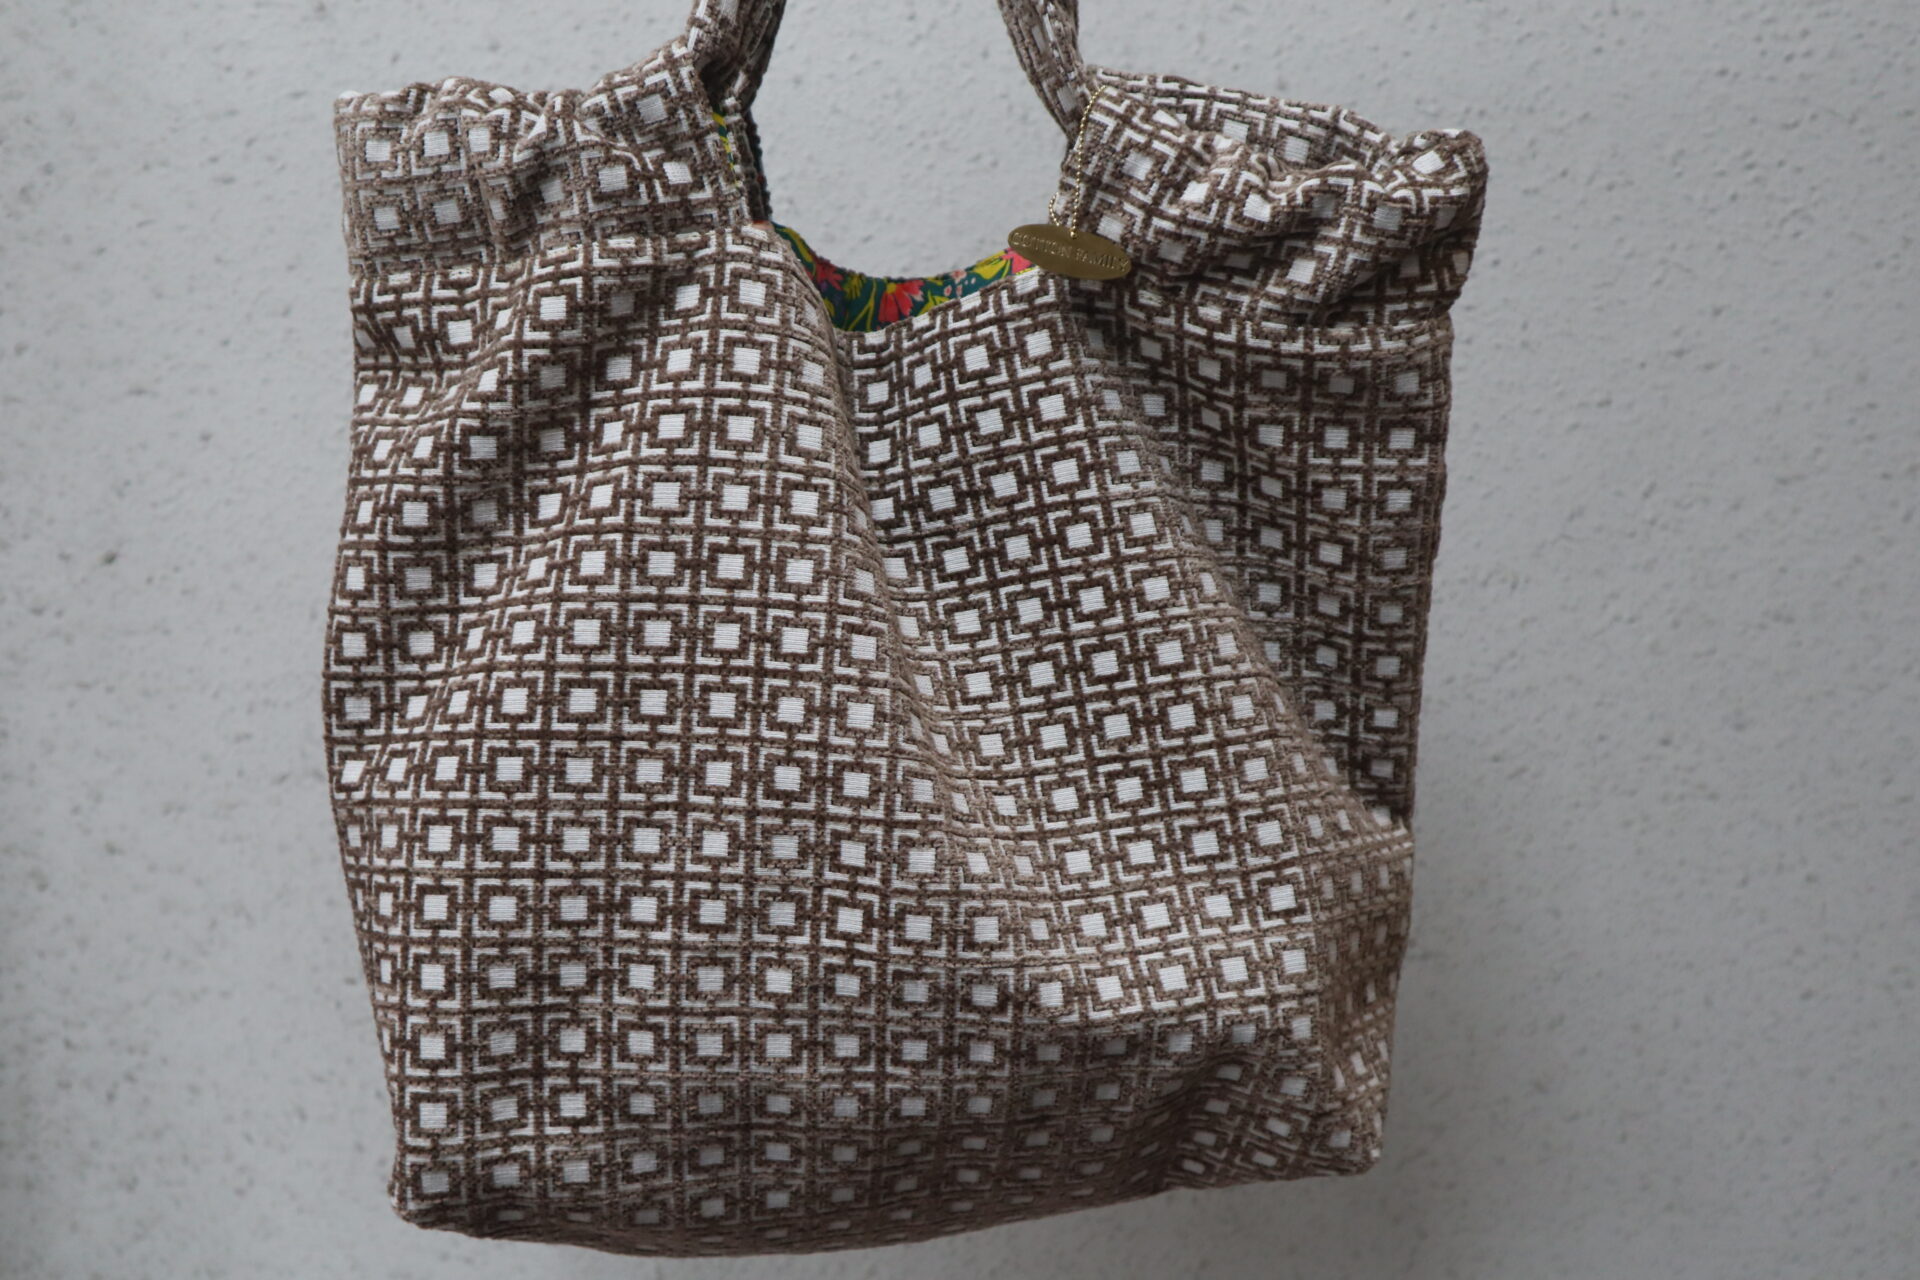 Pastor幾何学ジャガードの持ち手を通すタイプのバッグ